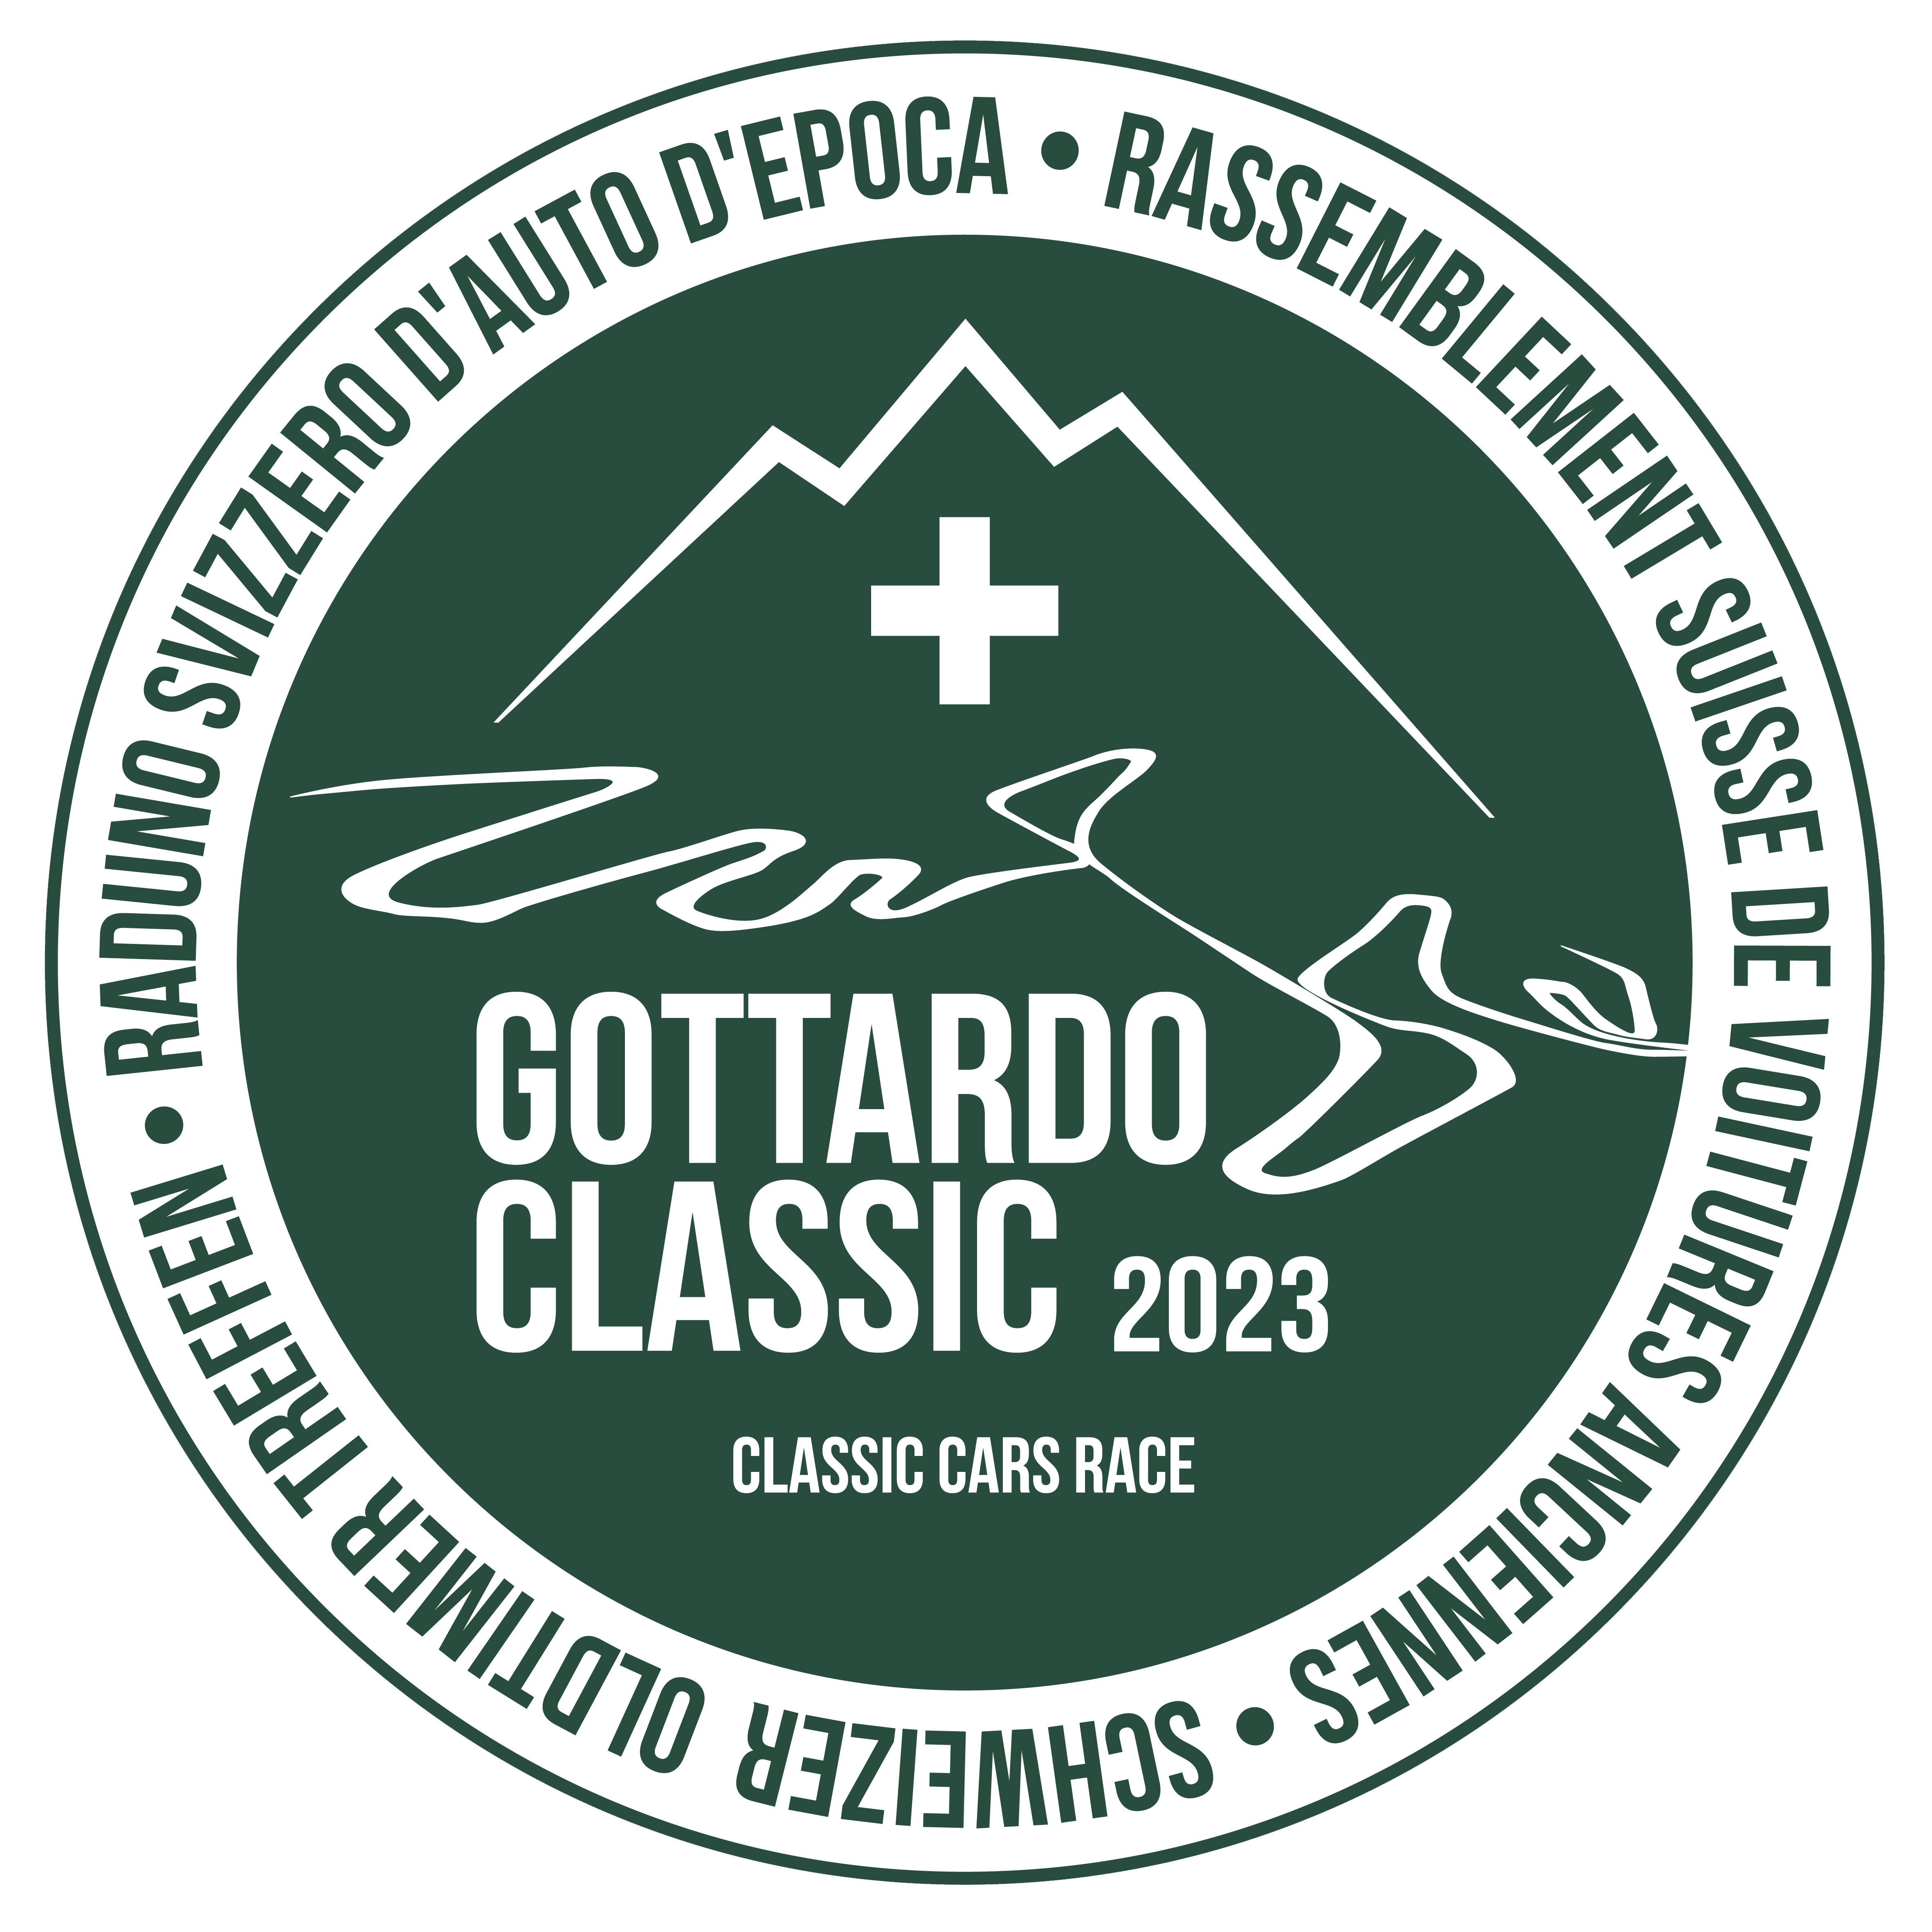 Gottardo Classic 2023